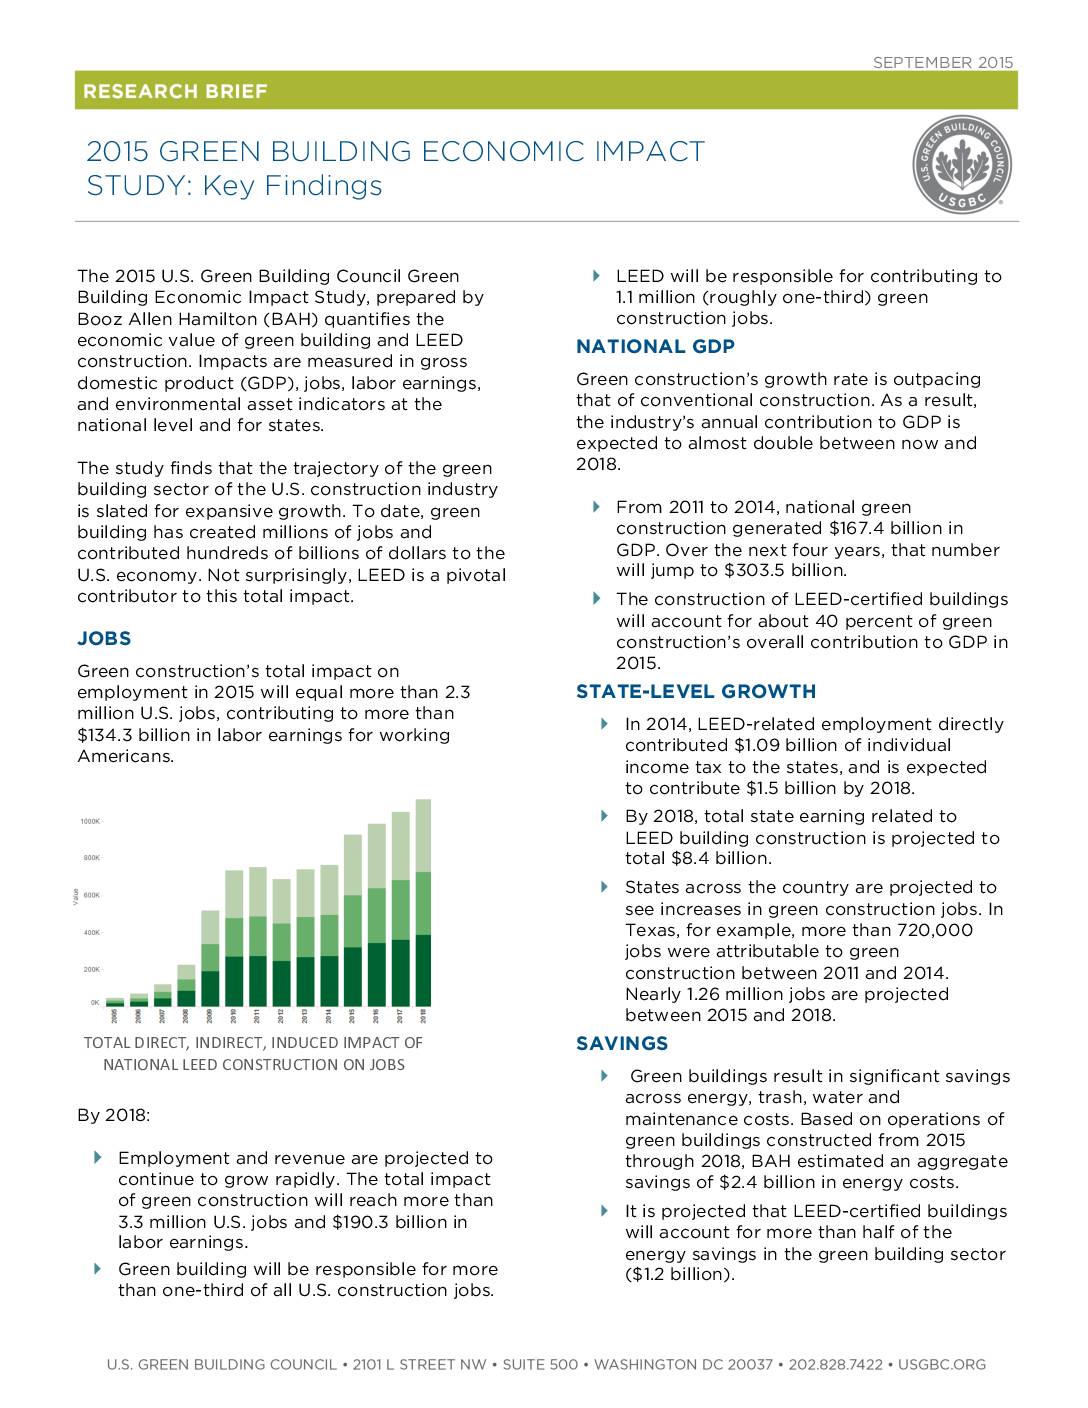 2015 Green Building Economic Impact Study: Key Findings